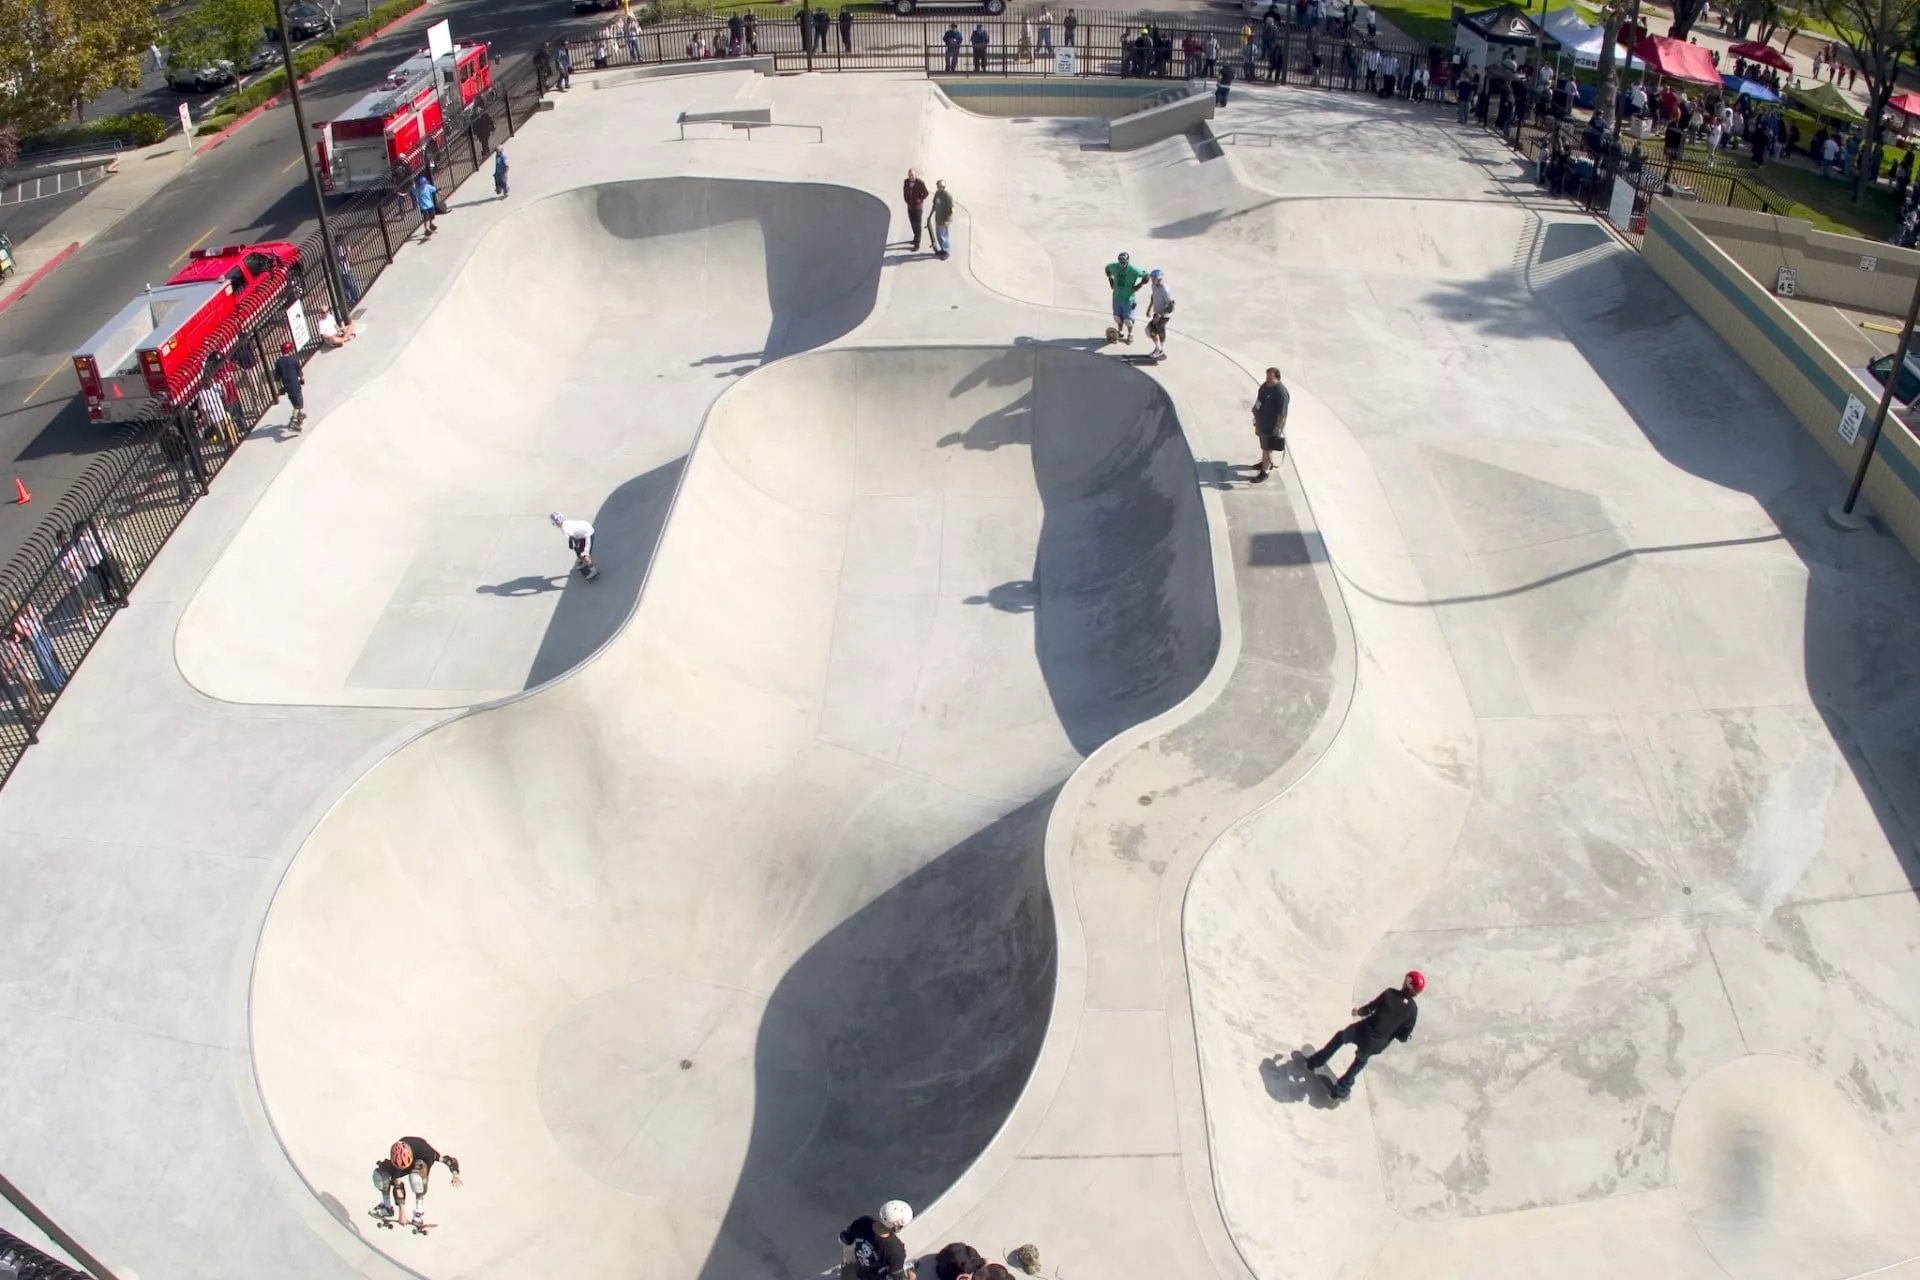 Skate Park Galit in Israel, Middle East | Skateboarding - Rated 5.3